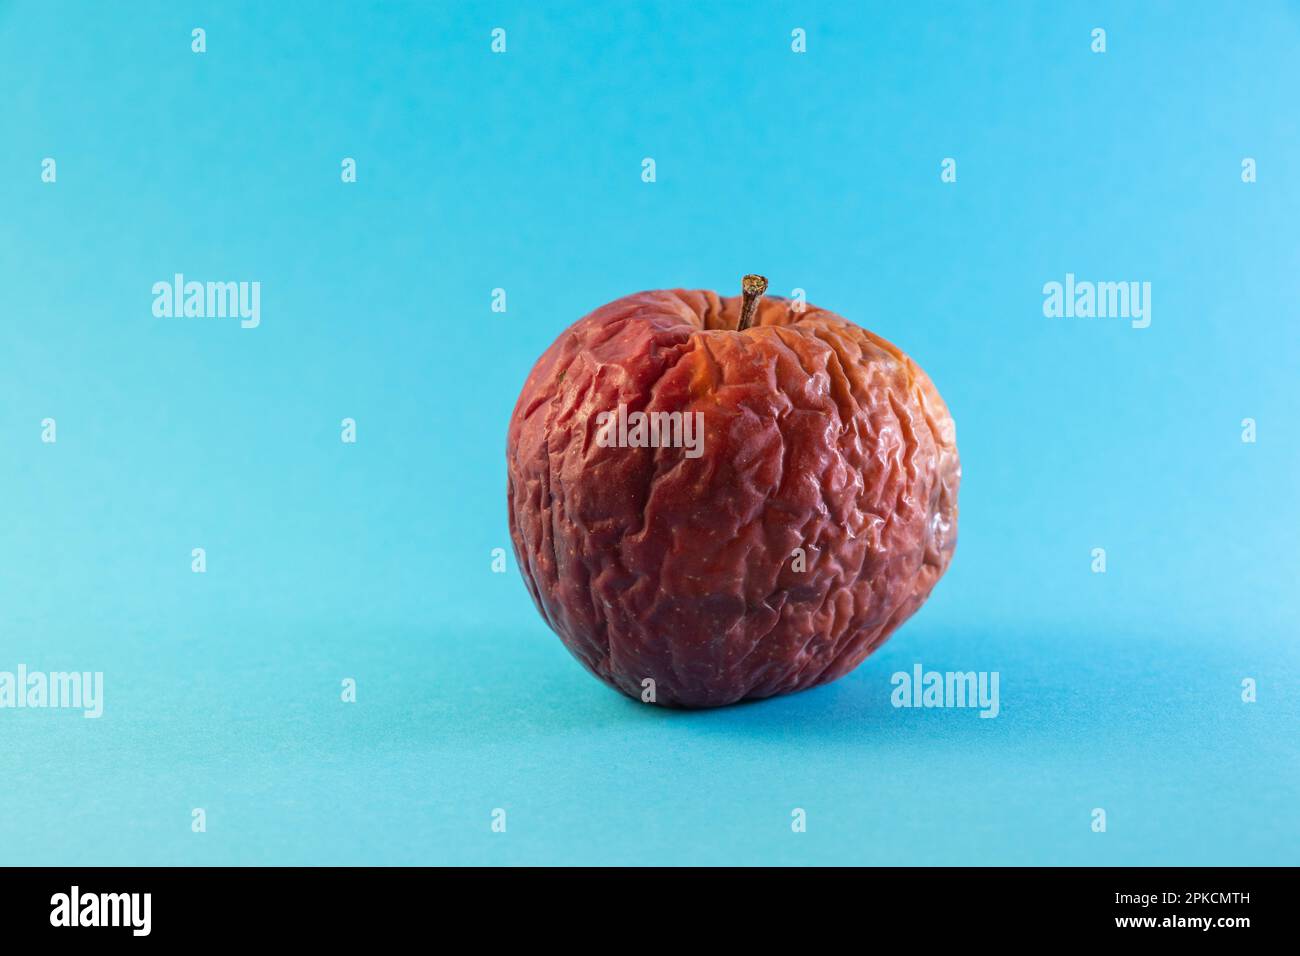 manzana podrida sobre un fondo de color primer plano Foto de stock